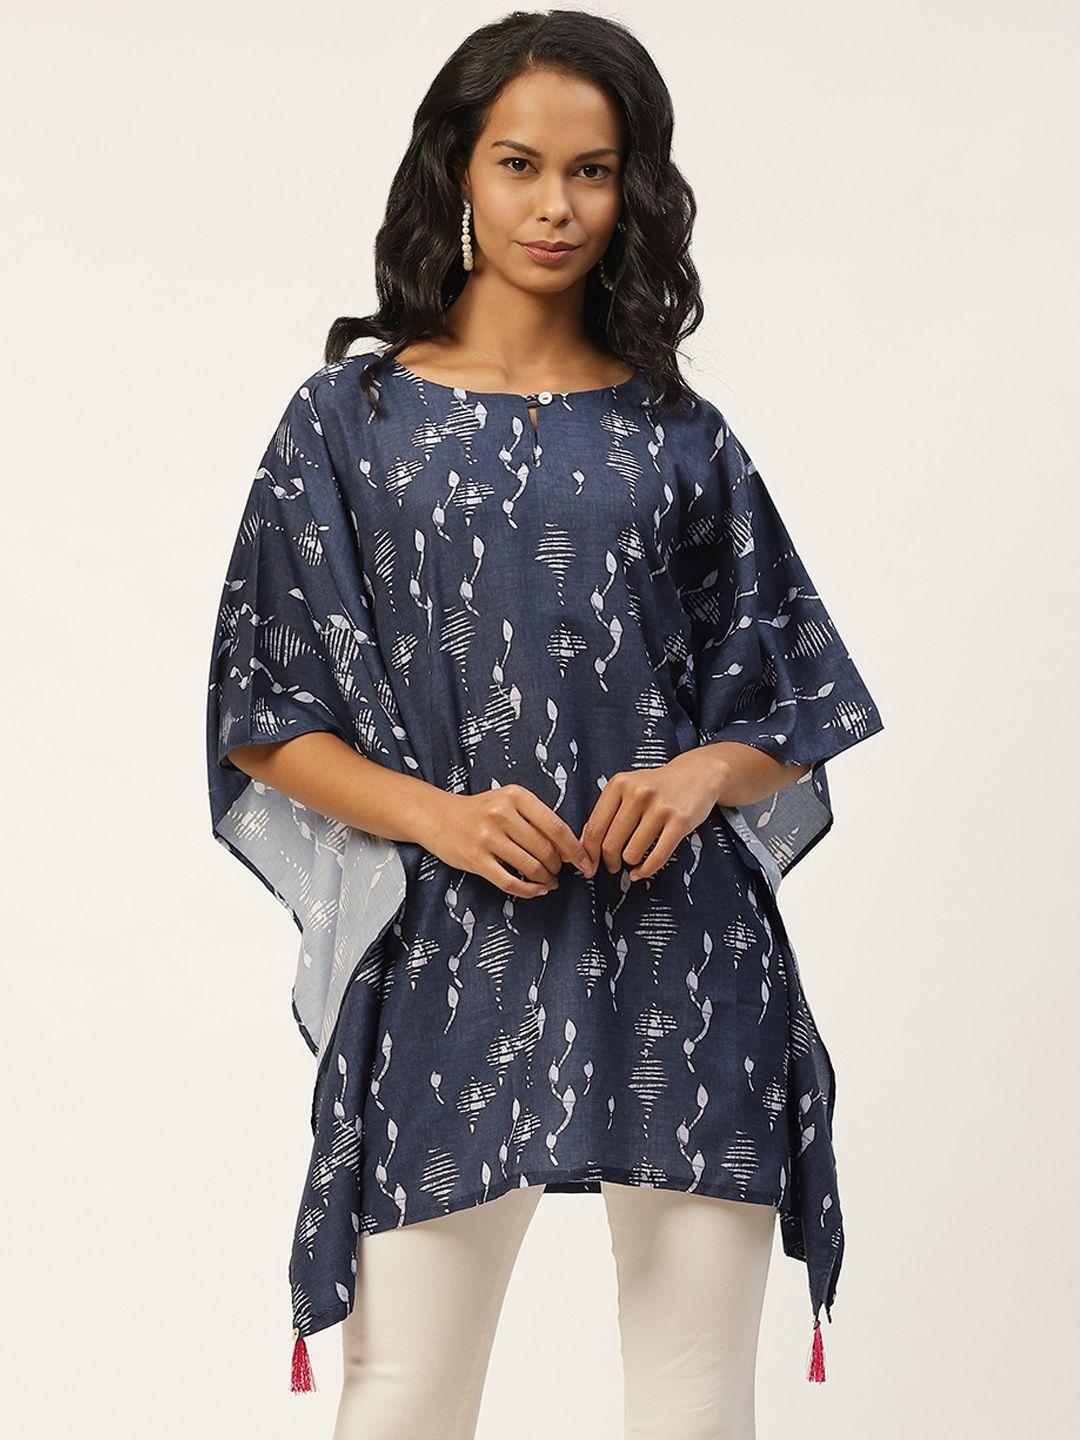 shiloh women's navy blue & off-white printed kaftan style tunic